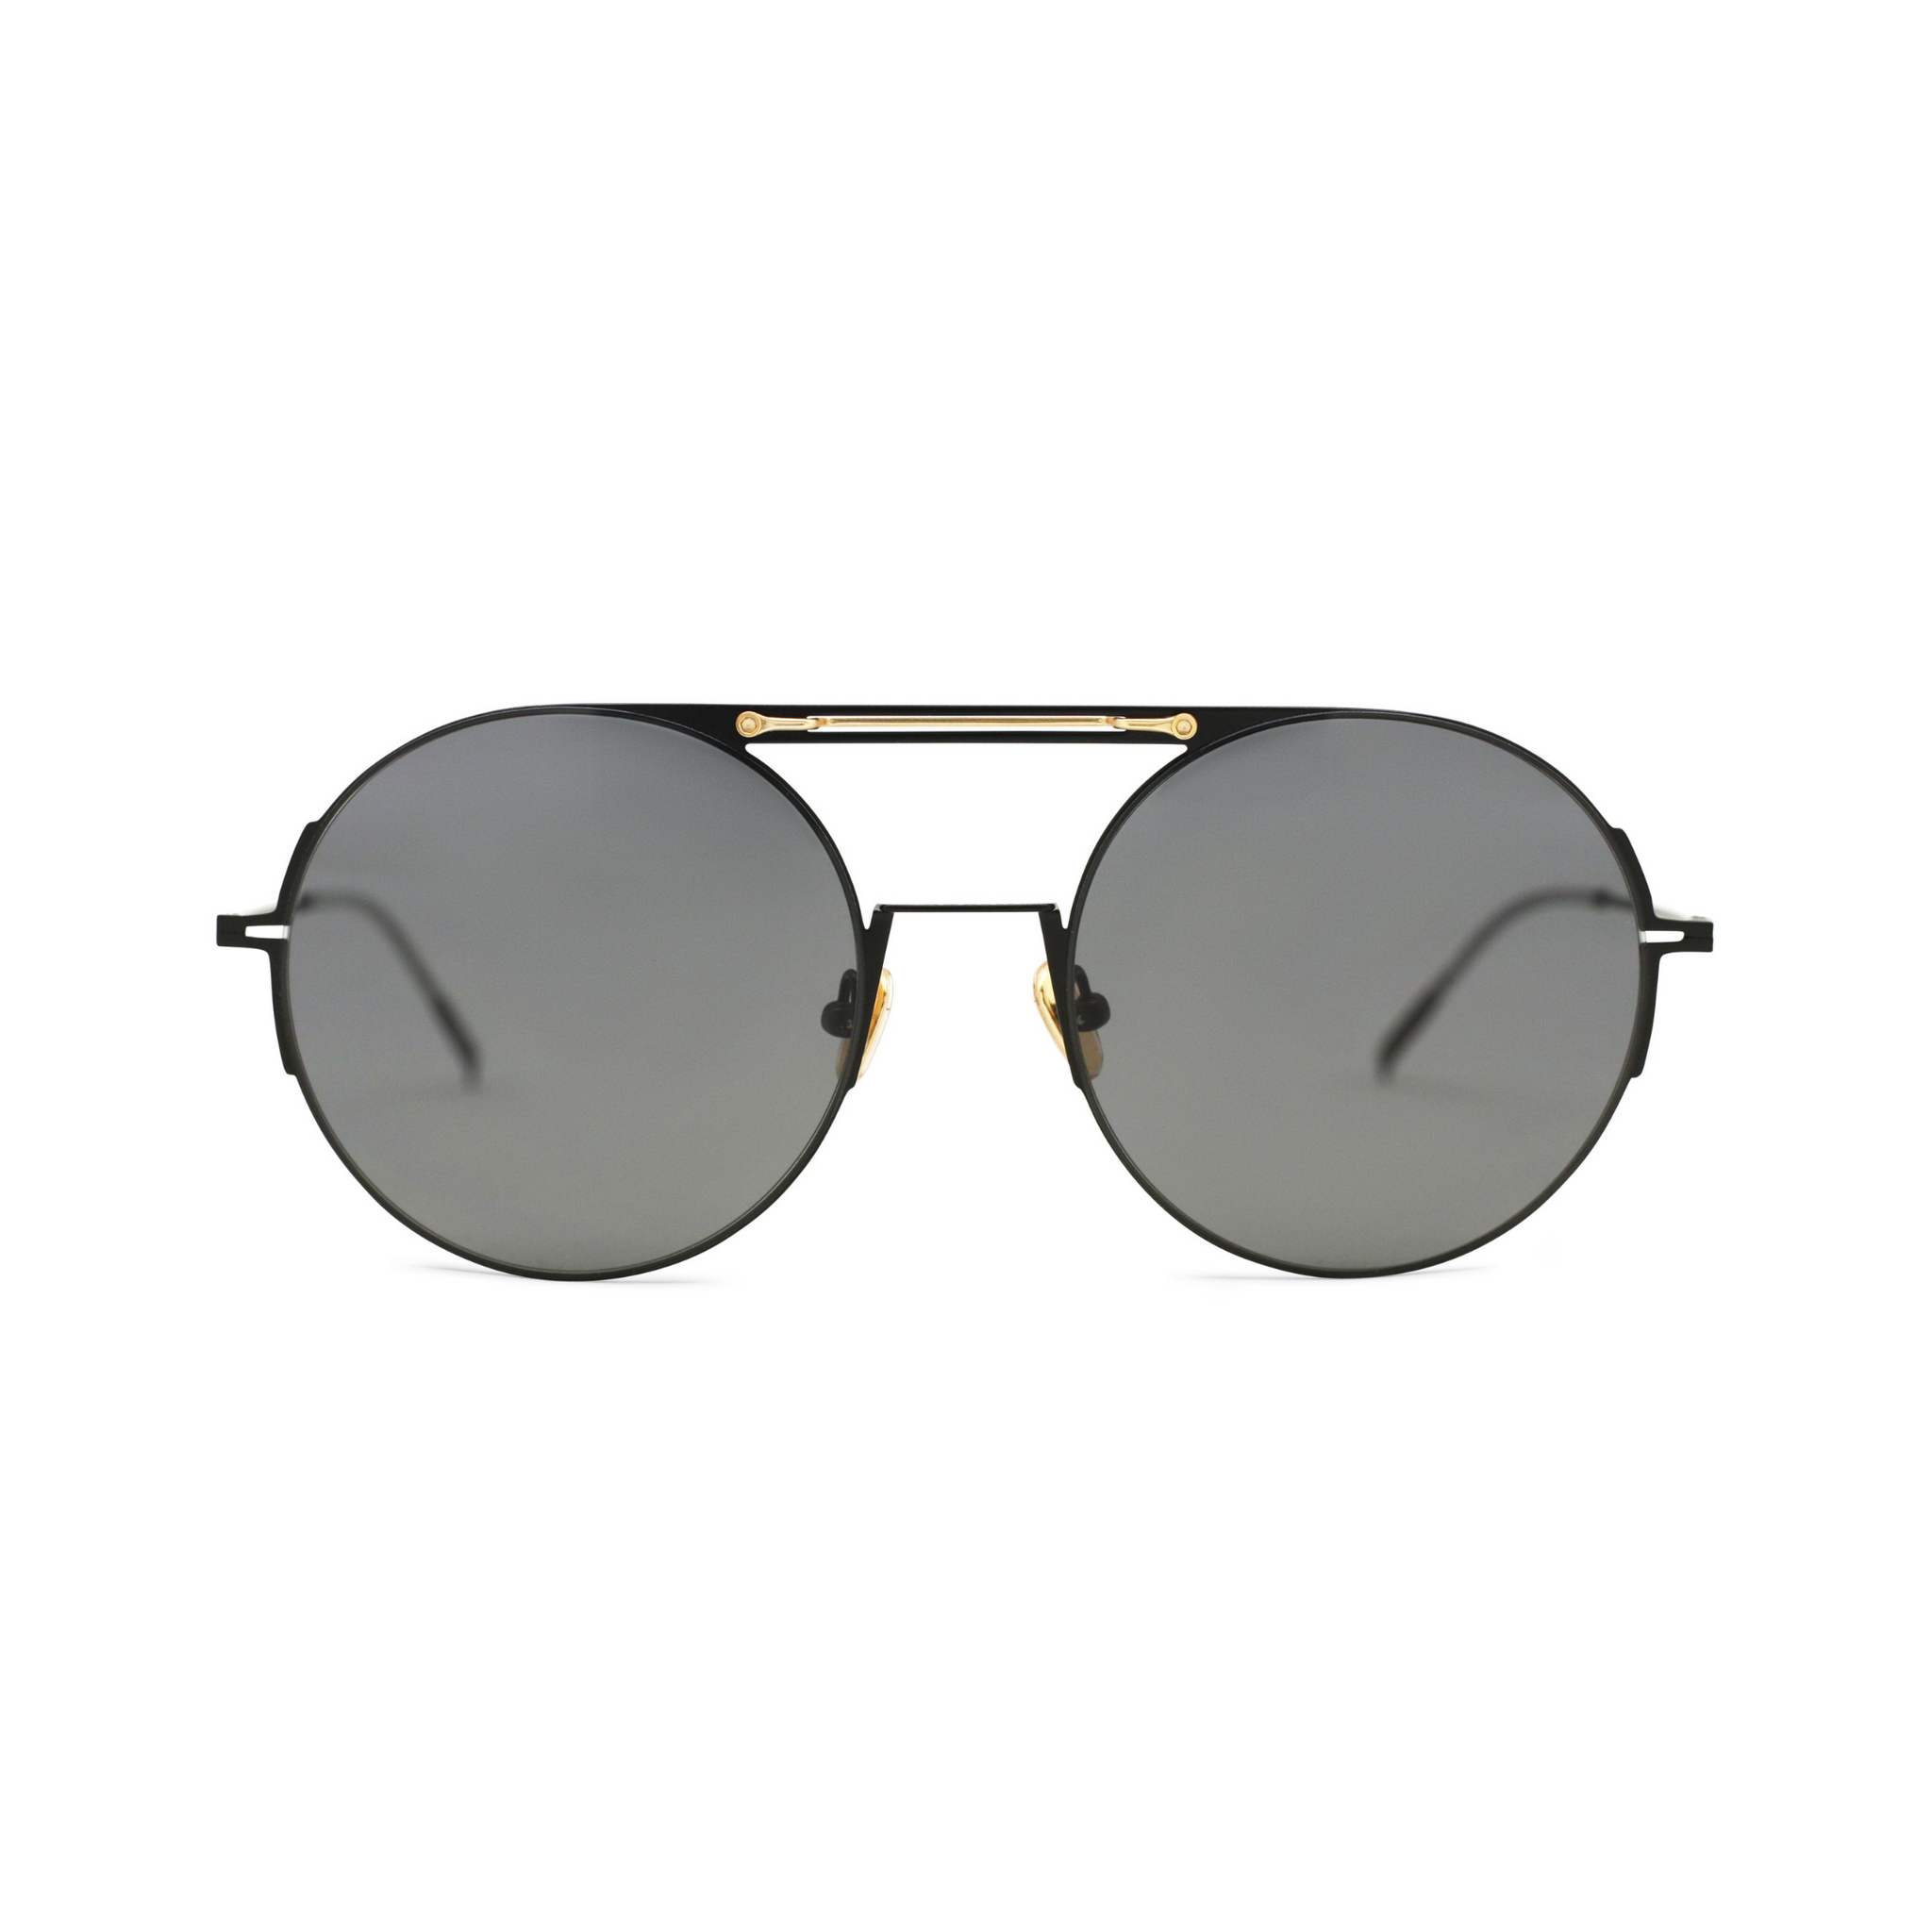 Tate's Top G Aviator Sunglasses